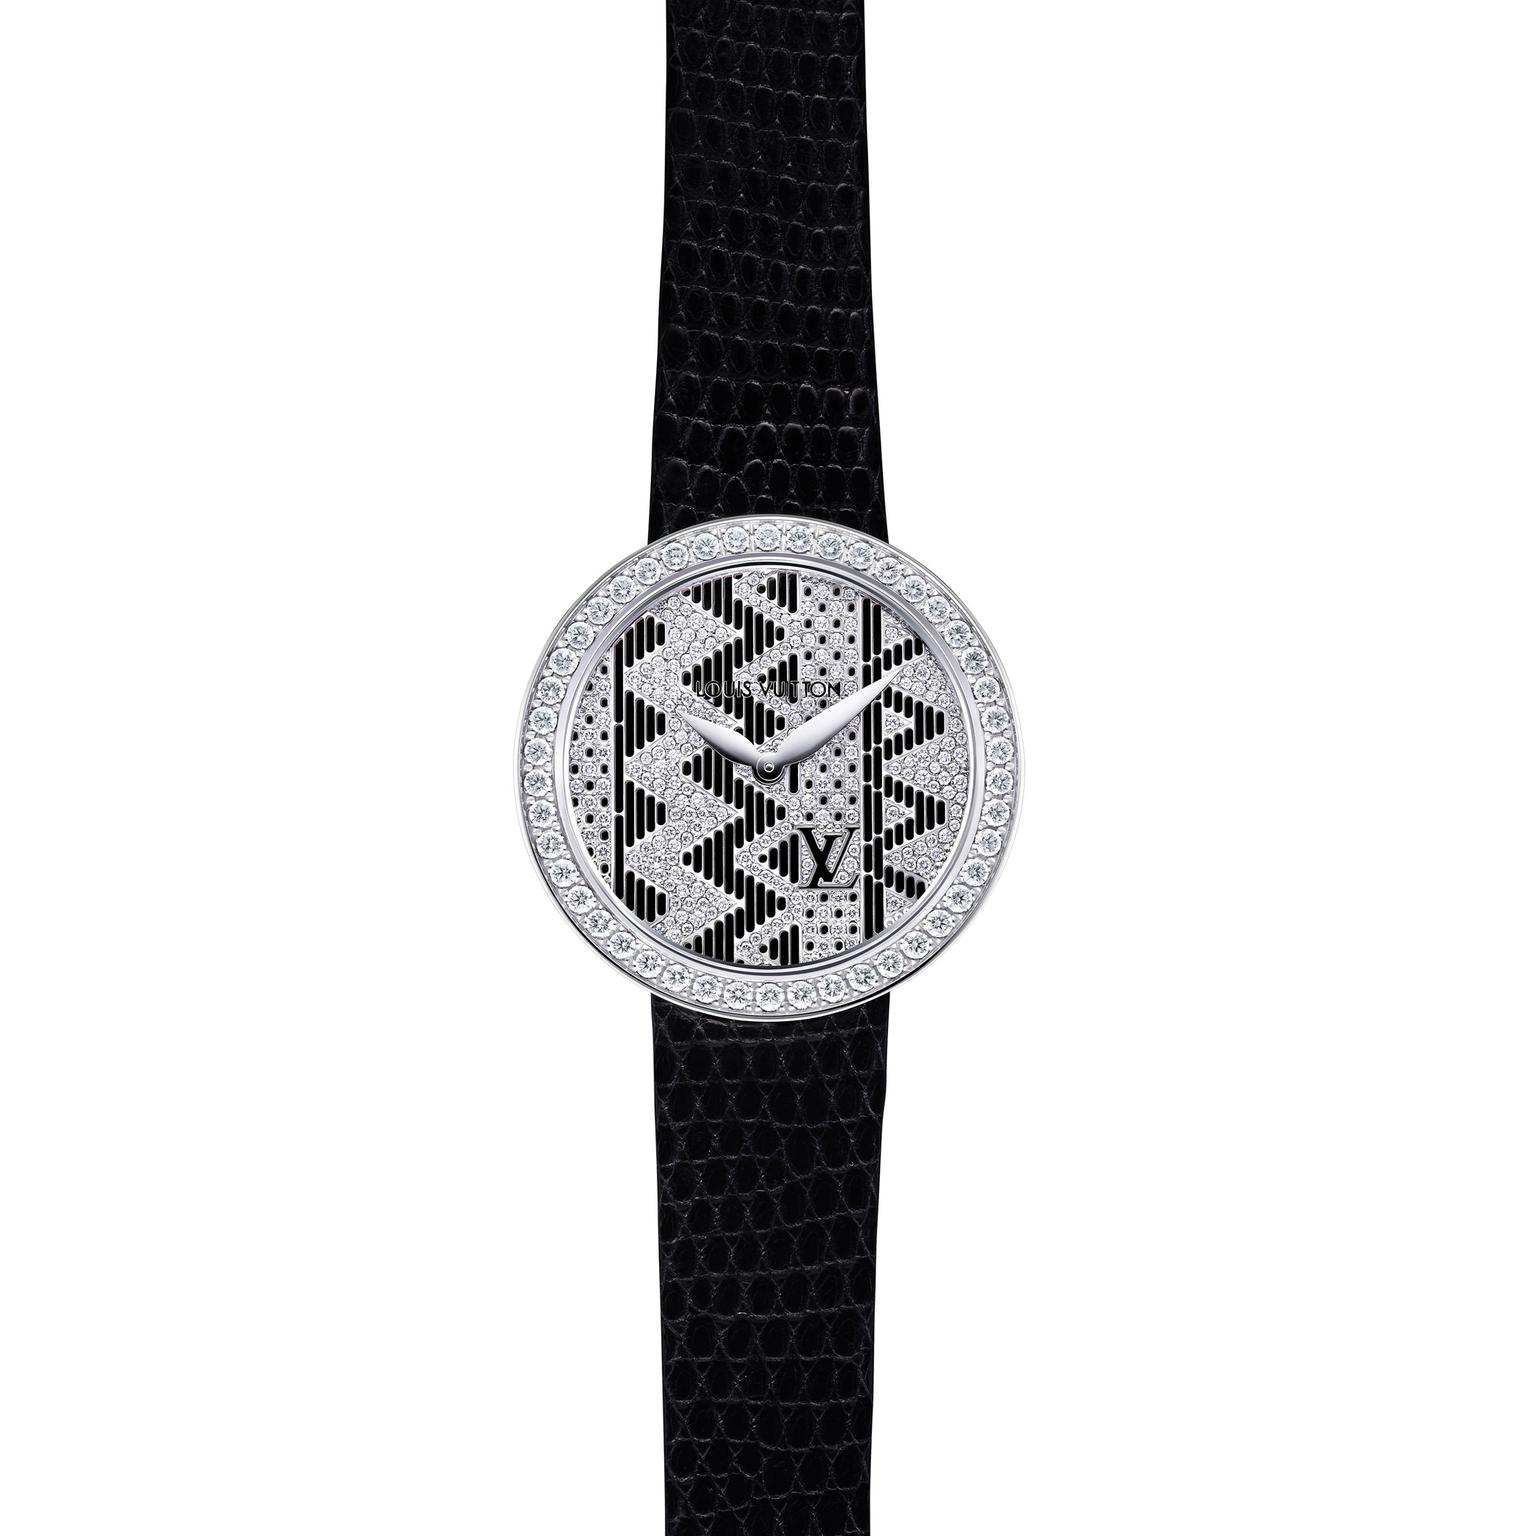 Louis Vuitton, Accessories, Polished Louis Vuitton Escale Time Zone Steel  Automatic Watch Q5d2 Bf55304